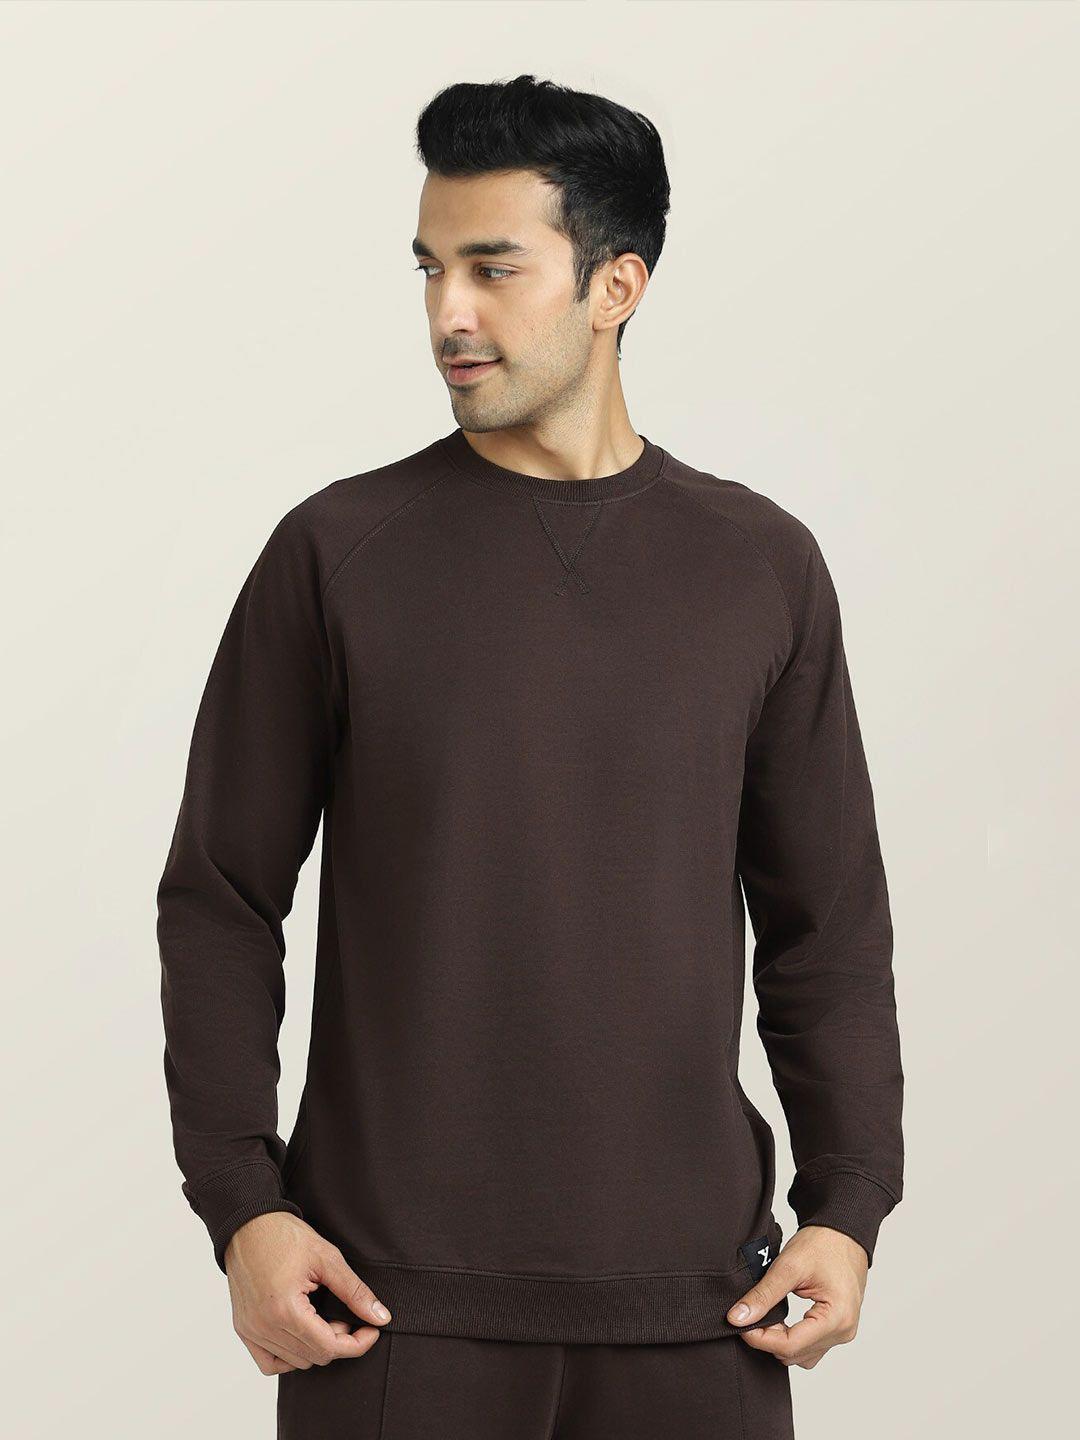 xyxx men brown solid cotton sweatshirt